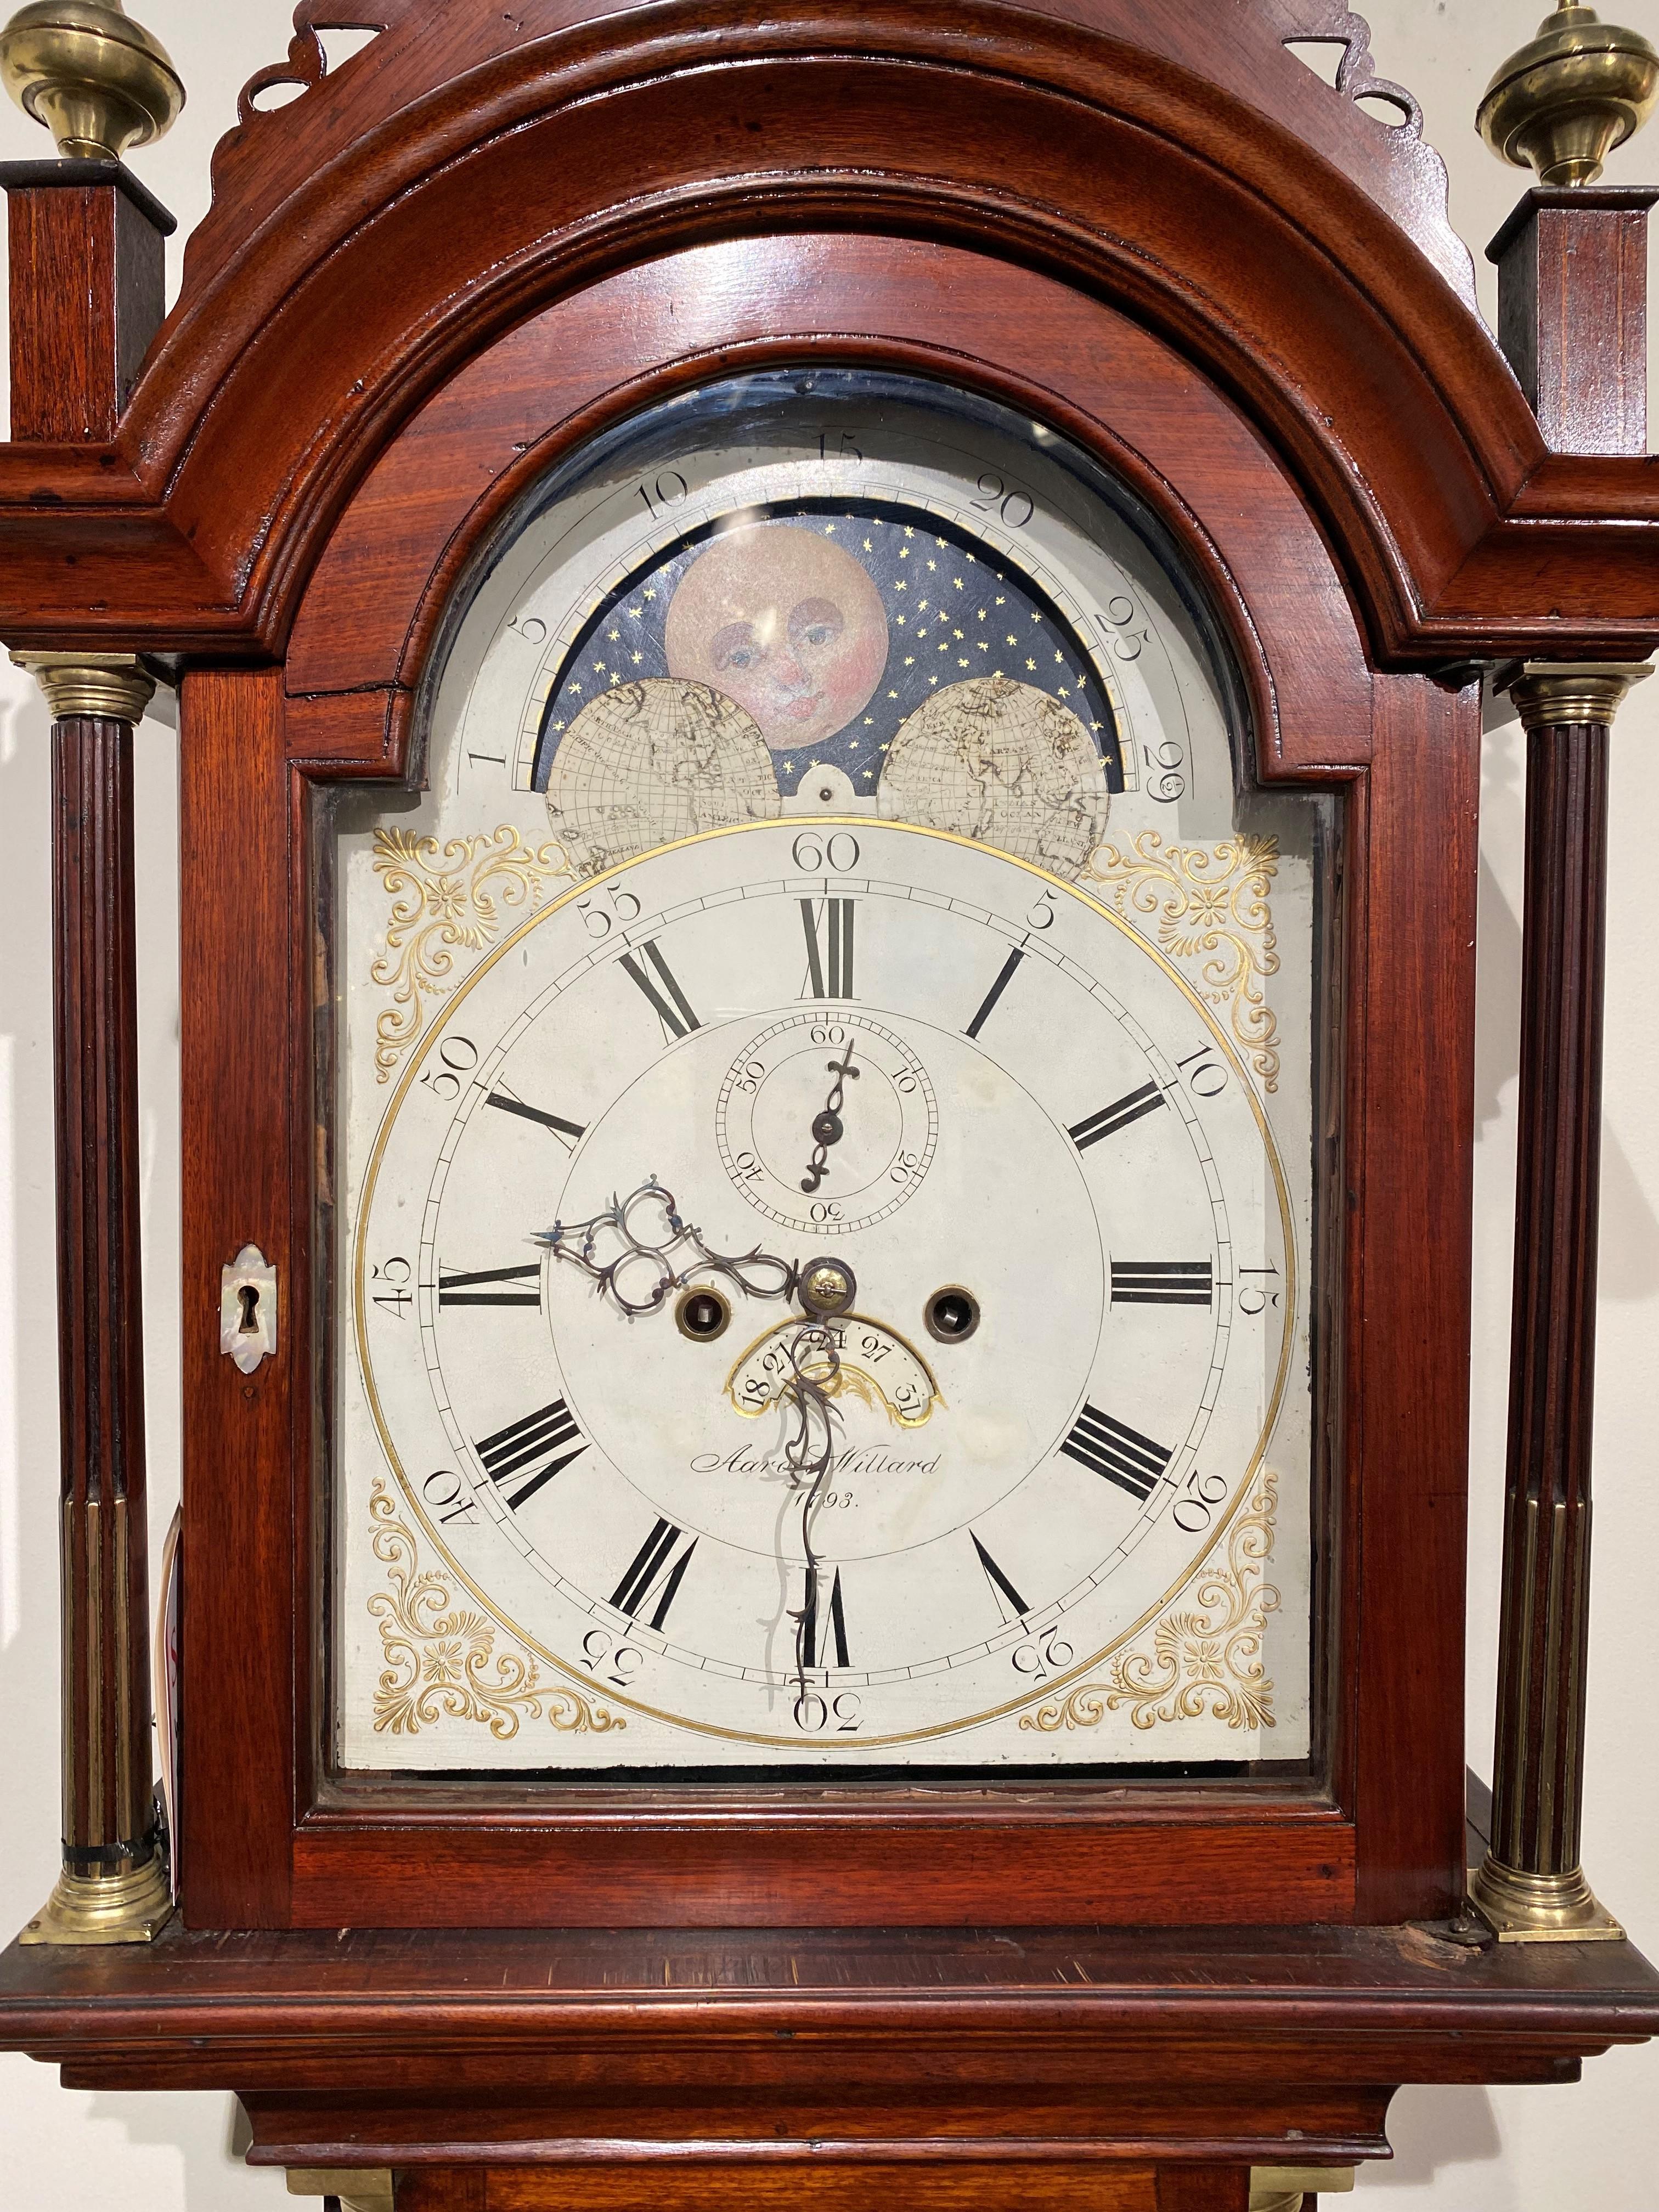 Brass Aaron Willard Mahogany Tall Case Clock with Moon Phase Dial 1793